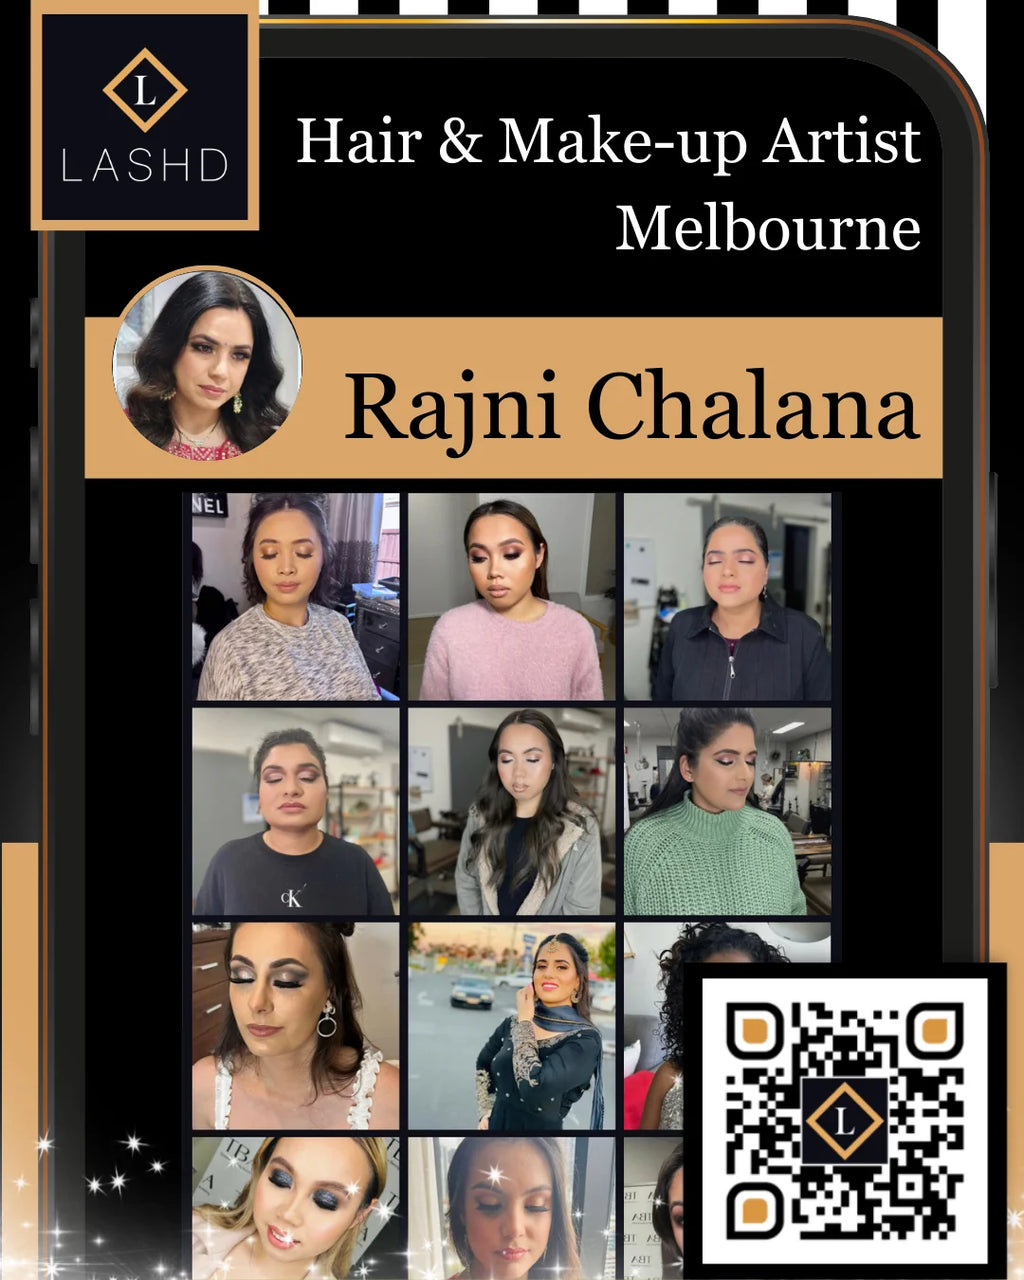 Hair & Makeup Artist - Fraser Rise - Melbourne - Lashd App - Rajni